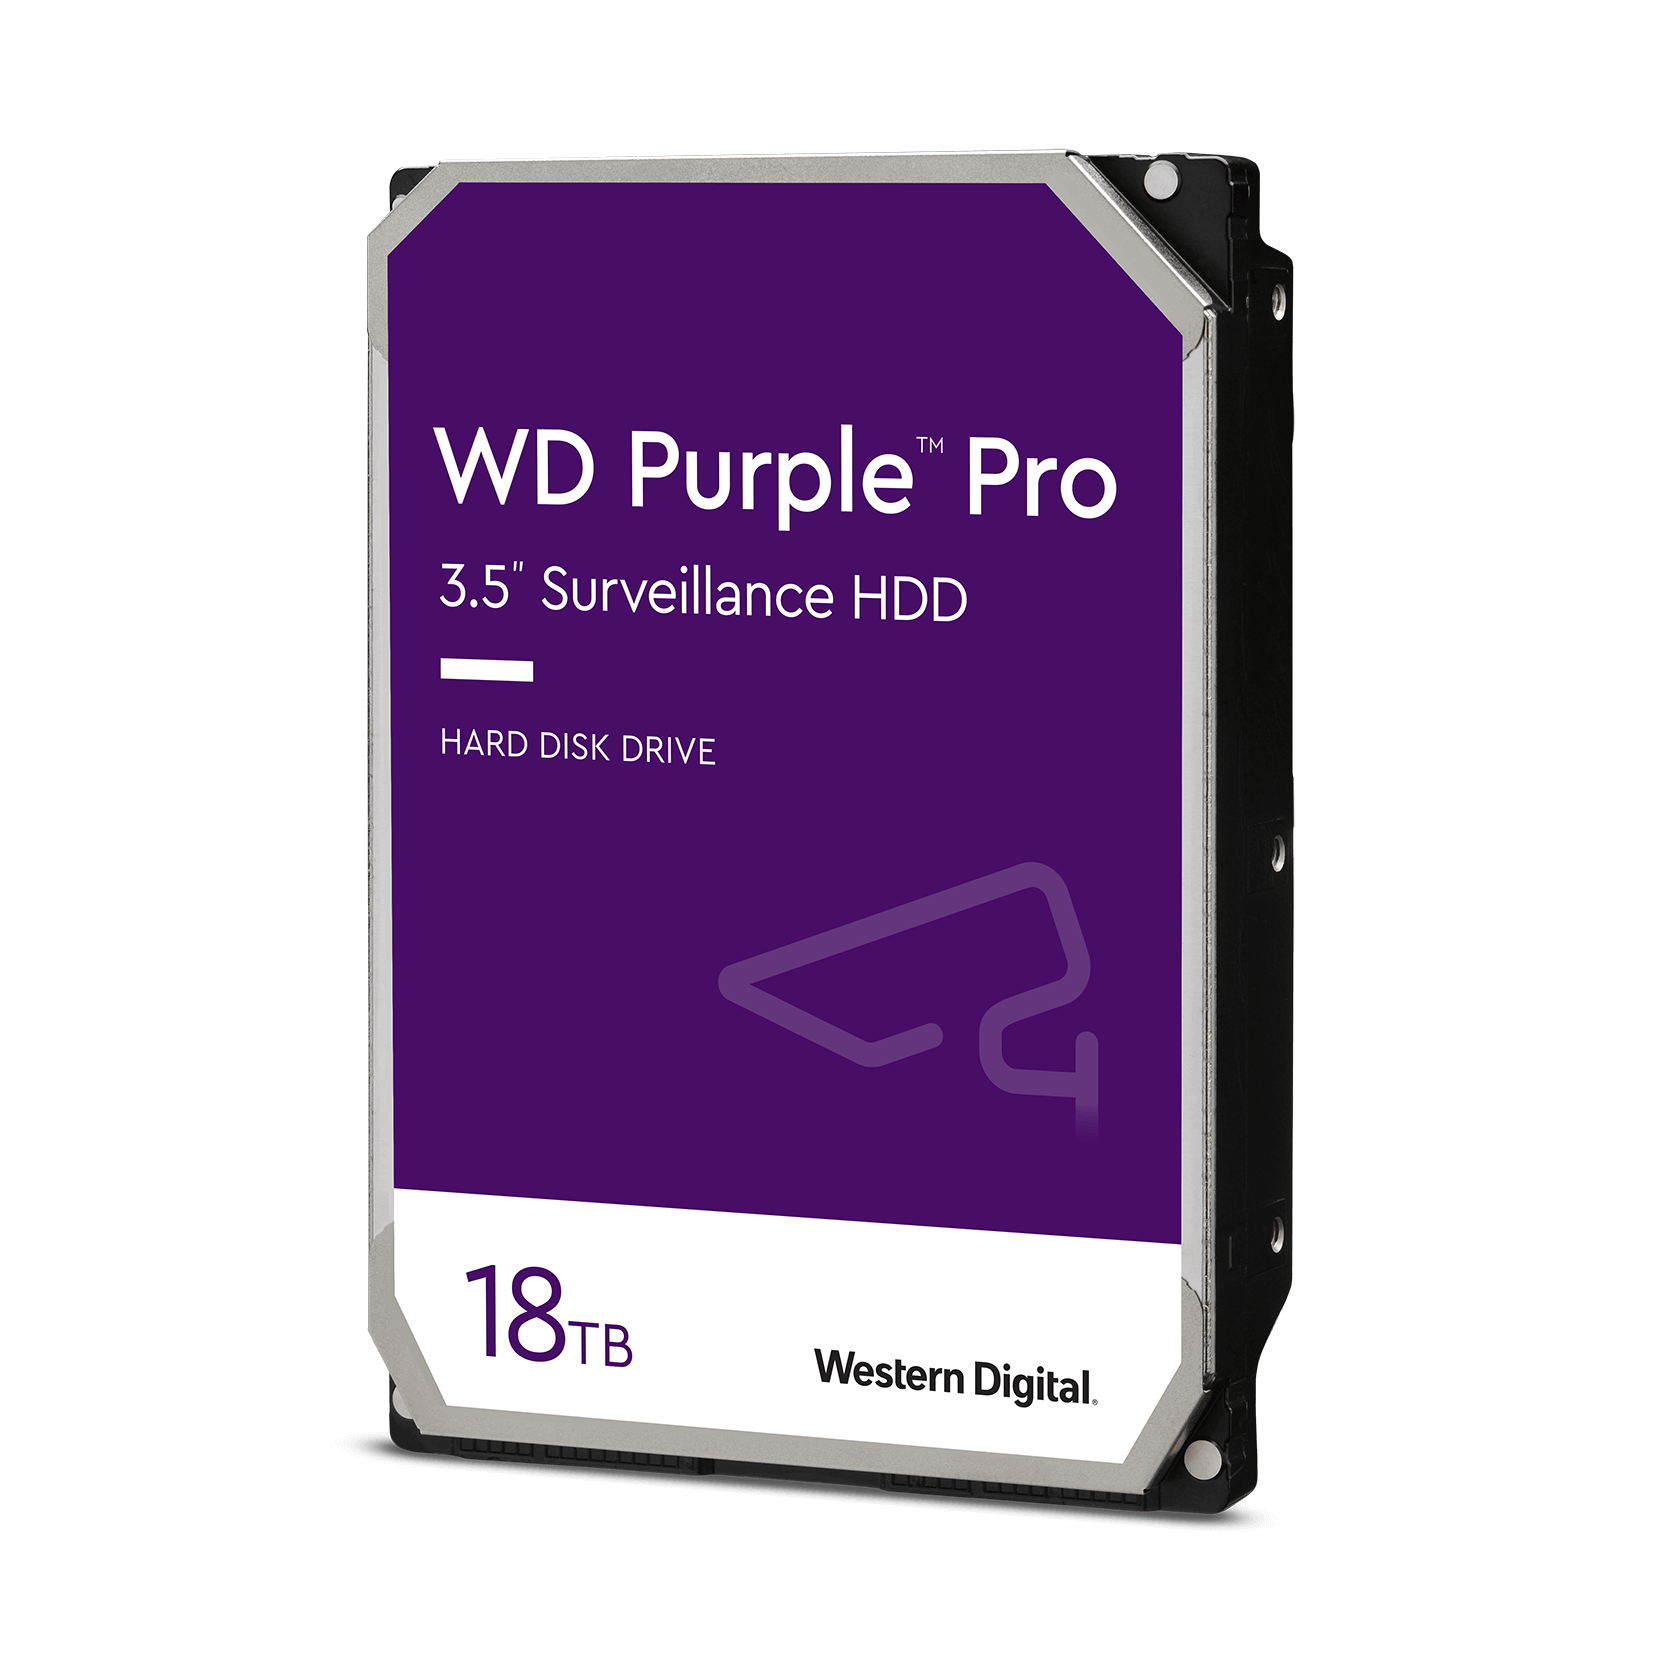 Western Digital 18TB WD Pro Surveillance, Purple Hard Drive - WD181PURP